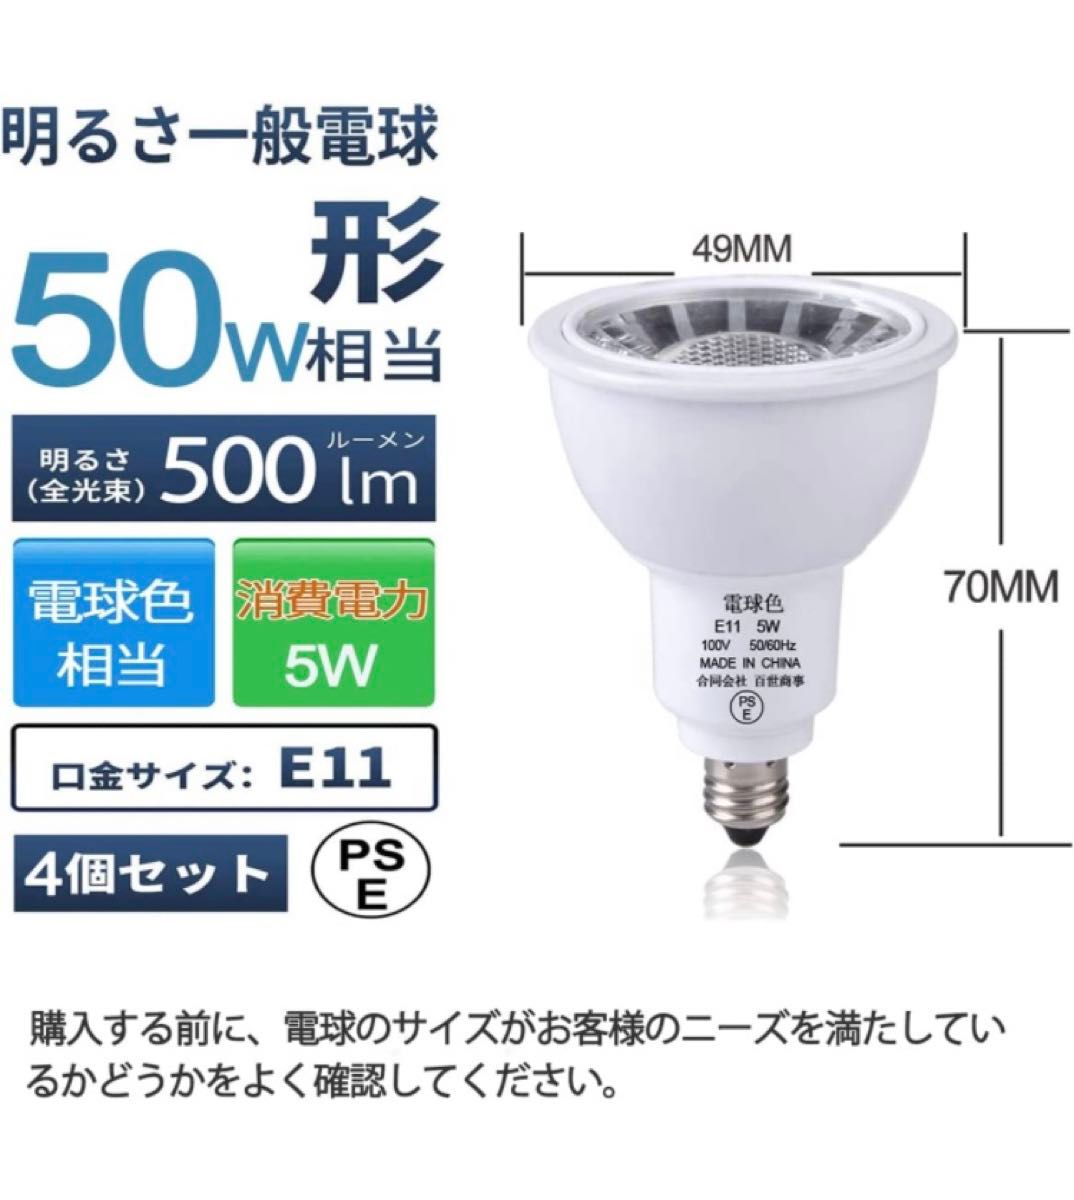 E11 LEDスポットライト E11口金 LED電球 50W形ハロゲン電球相当 5W 調光